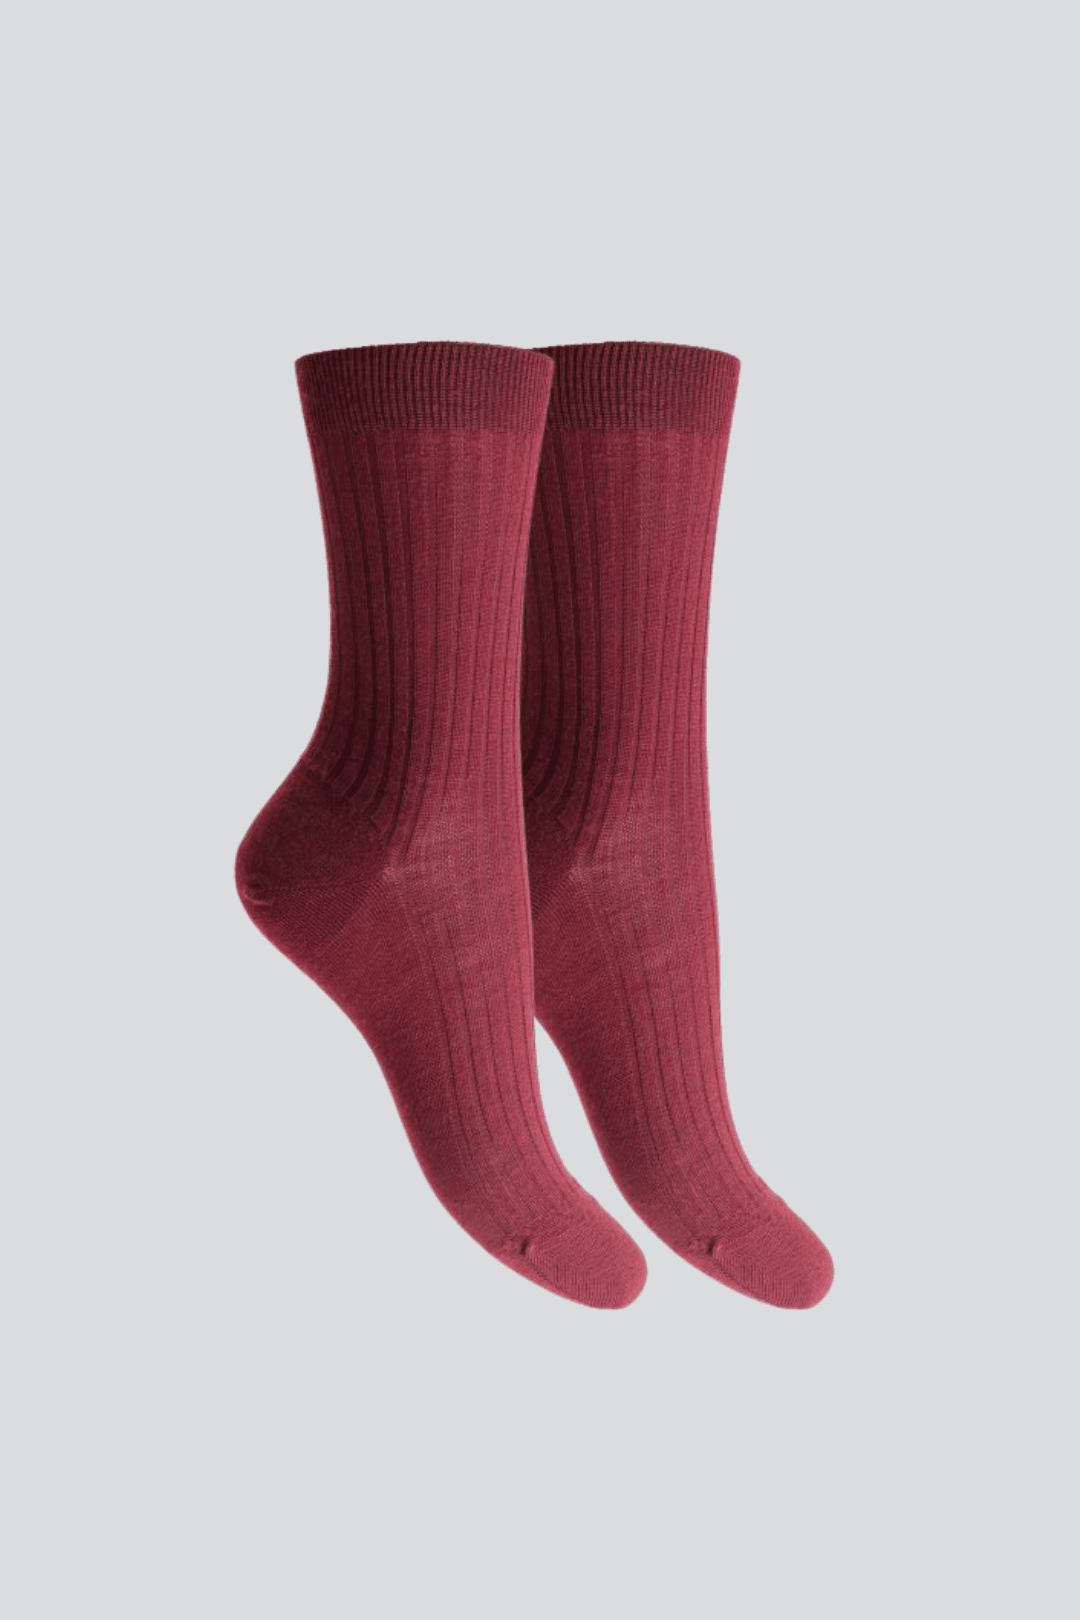 Merino Wool Socks Women's Socks Lavender Hill